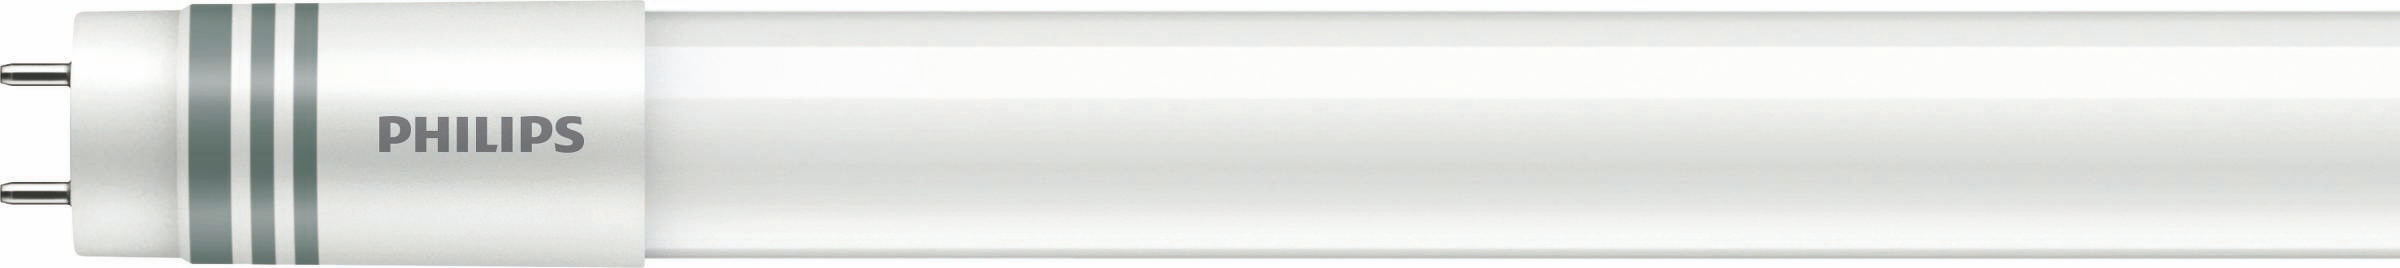 Philips 78279500 CorePro LEDtube Universal T8 KVG/VVG/EVG/230V 600 mm, 240 °, 8 W, 840, 900 lm, G13, nicht dimmbar